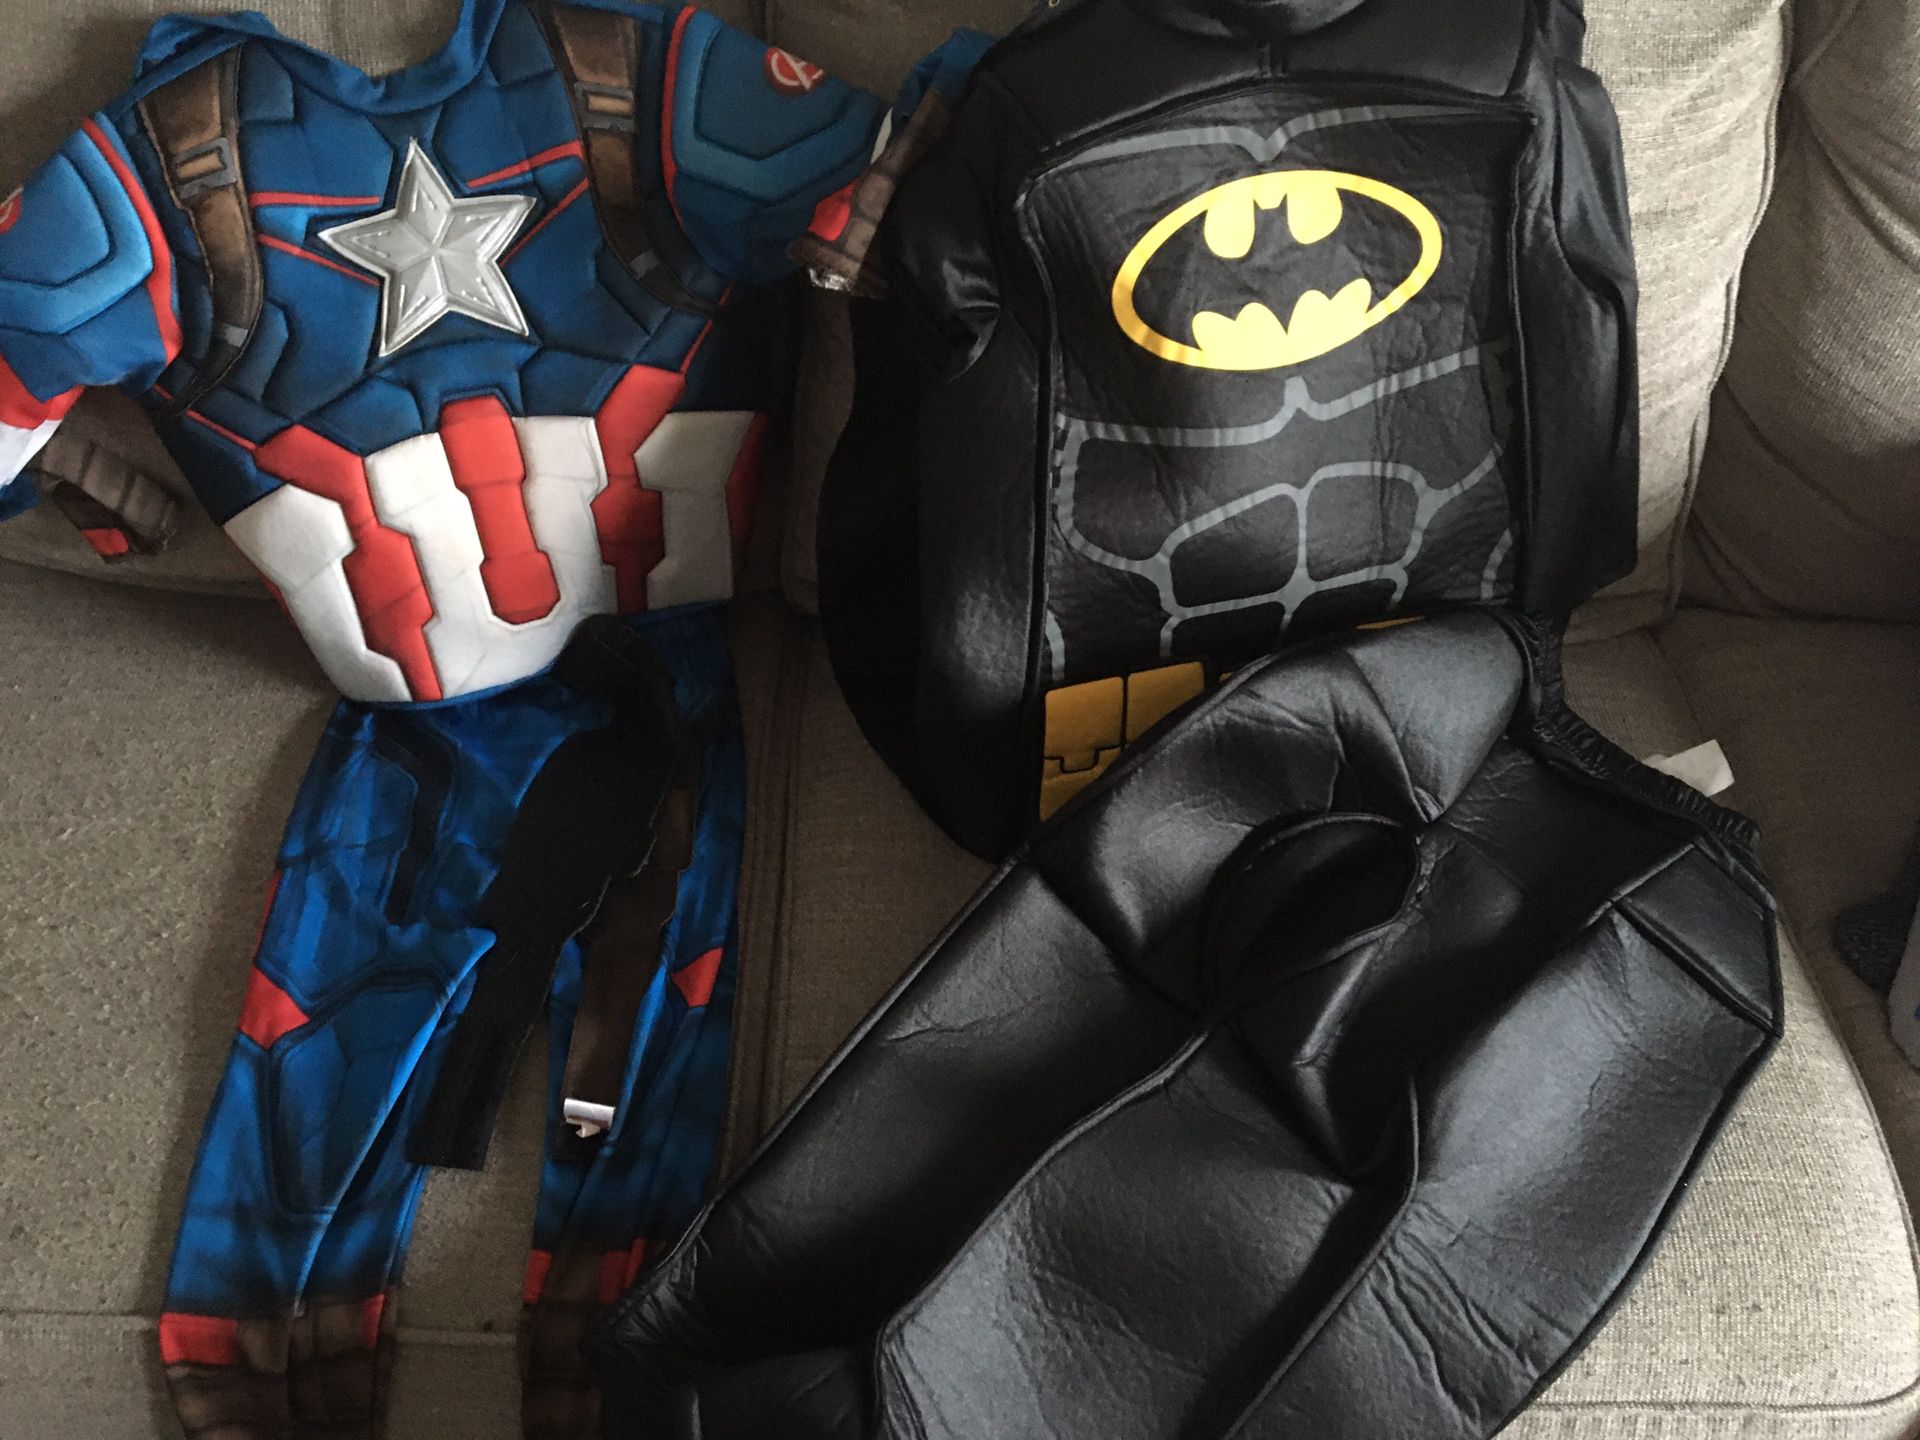 Batman and Captain America costumes